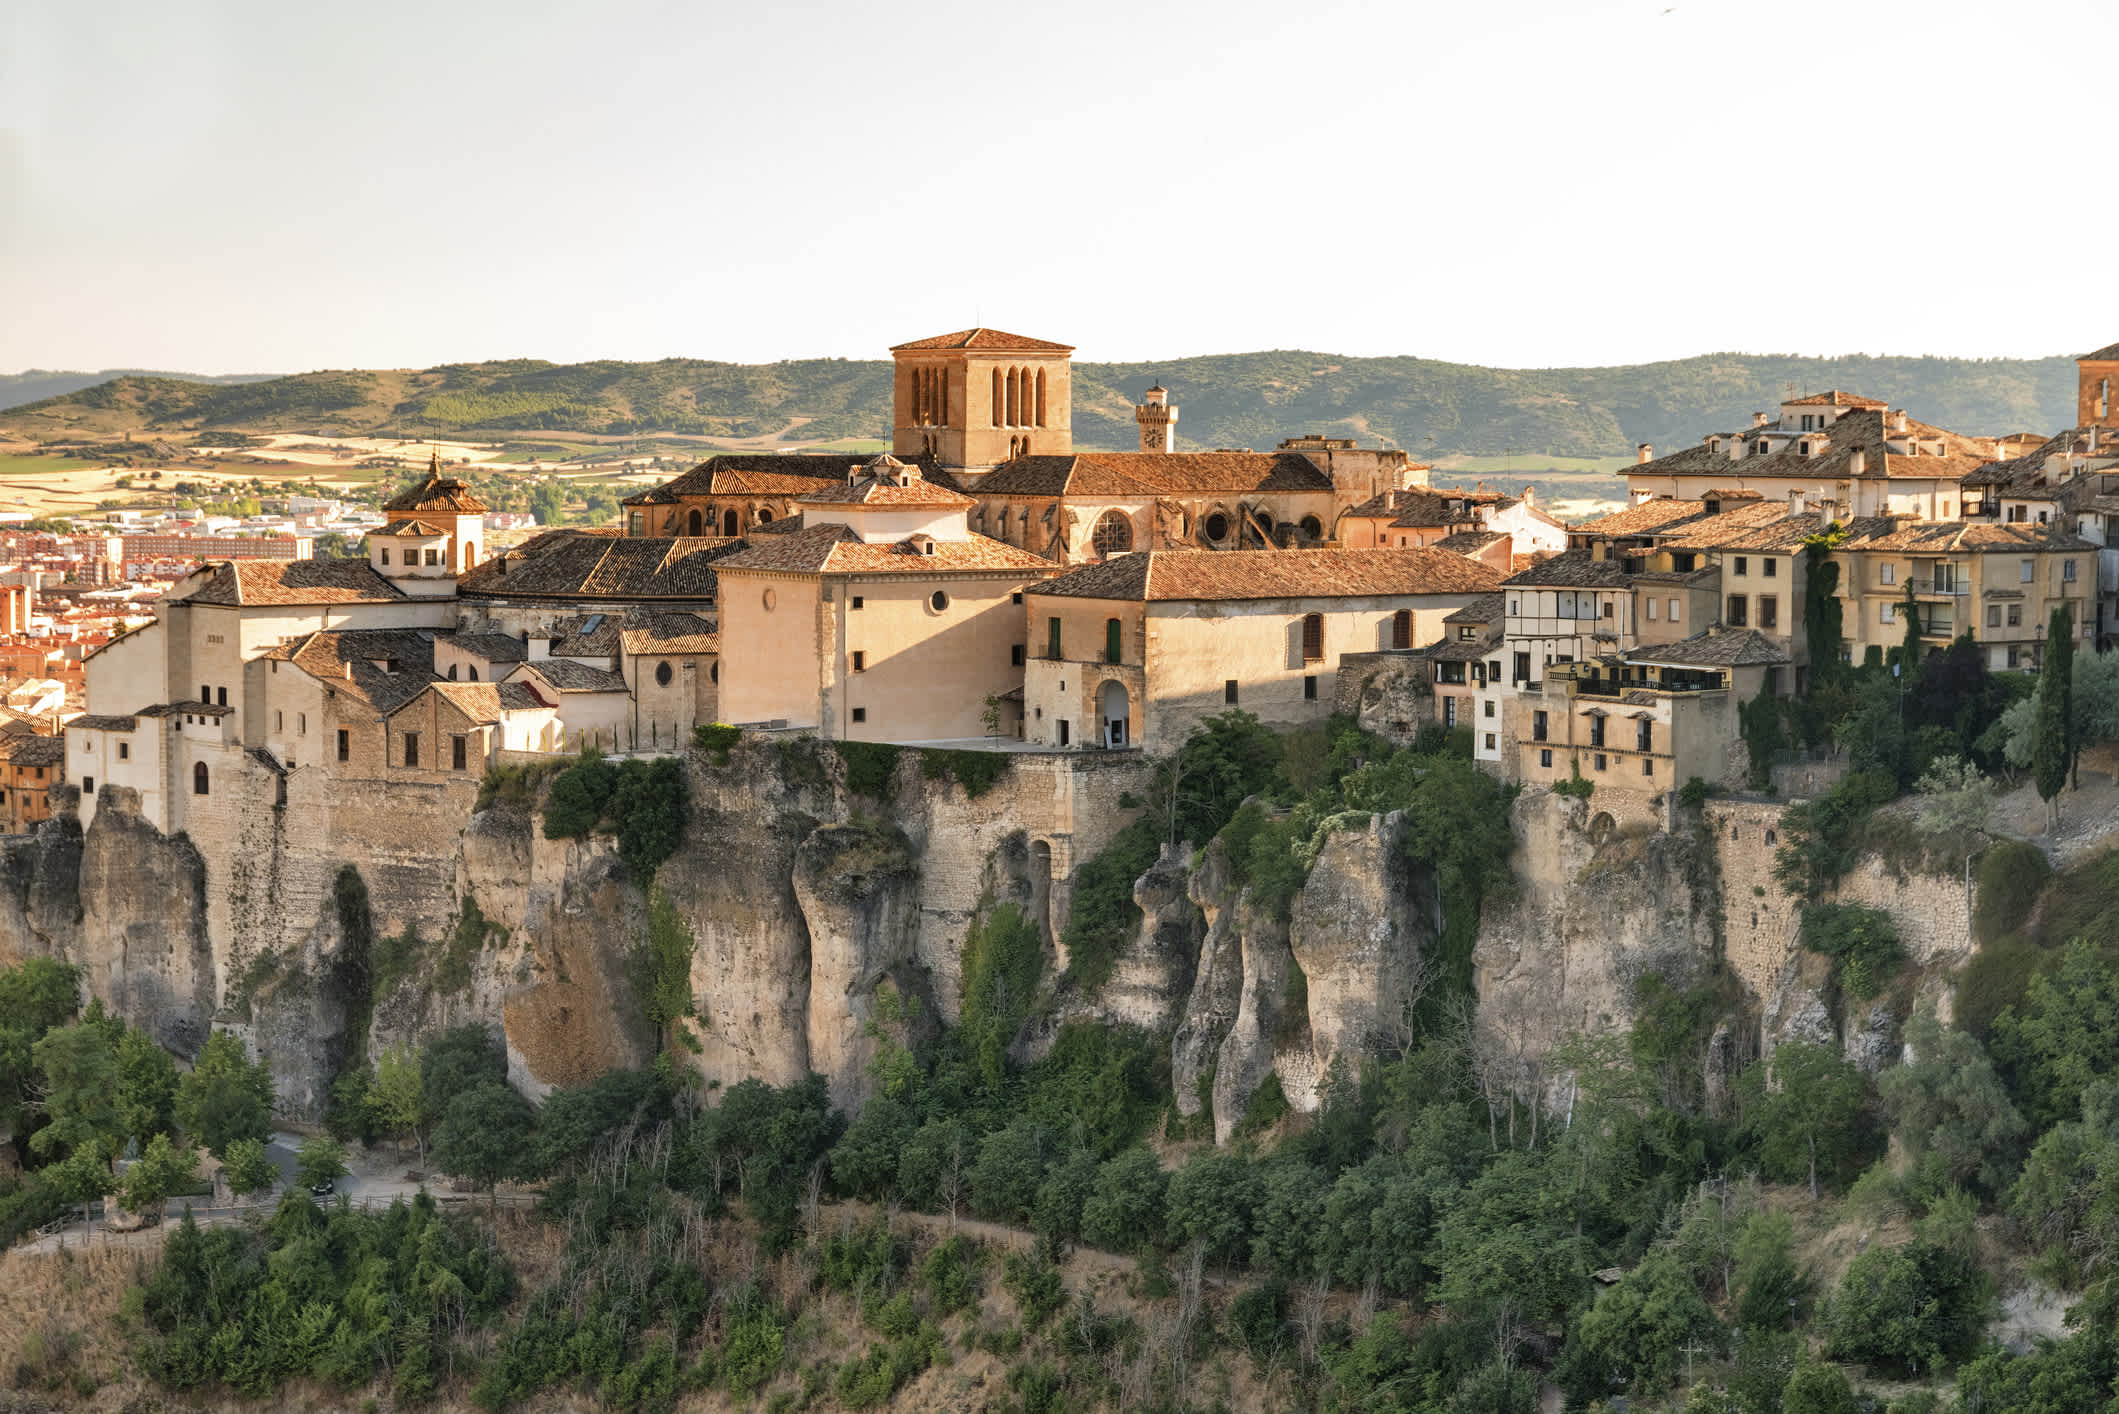 Blick auf die berühmten Casas Colgadas in Cuenca, Kastilien-La Mancha, Spanien.

